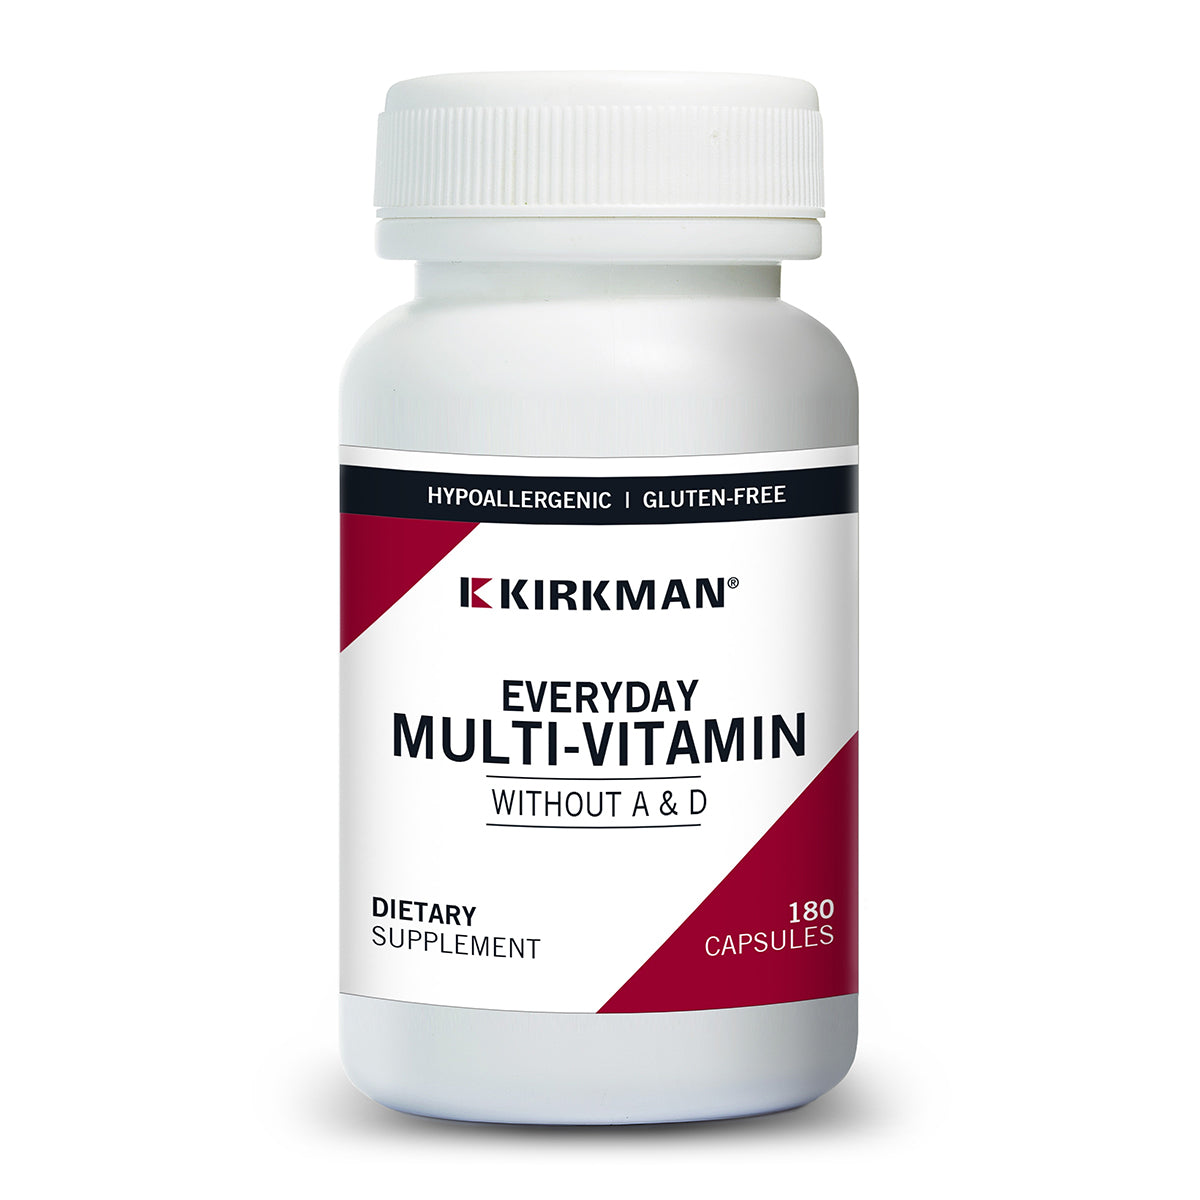 EveryDay Multi-Vitamin w/o Vitamins A & D - Hypoallergenic - My Village Green